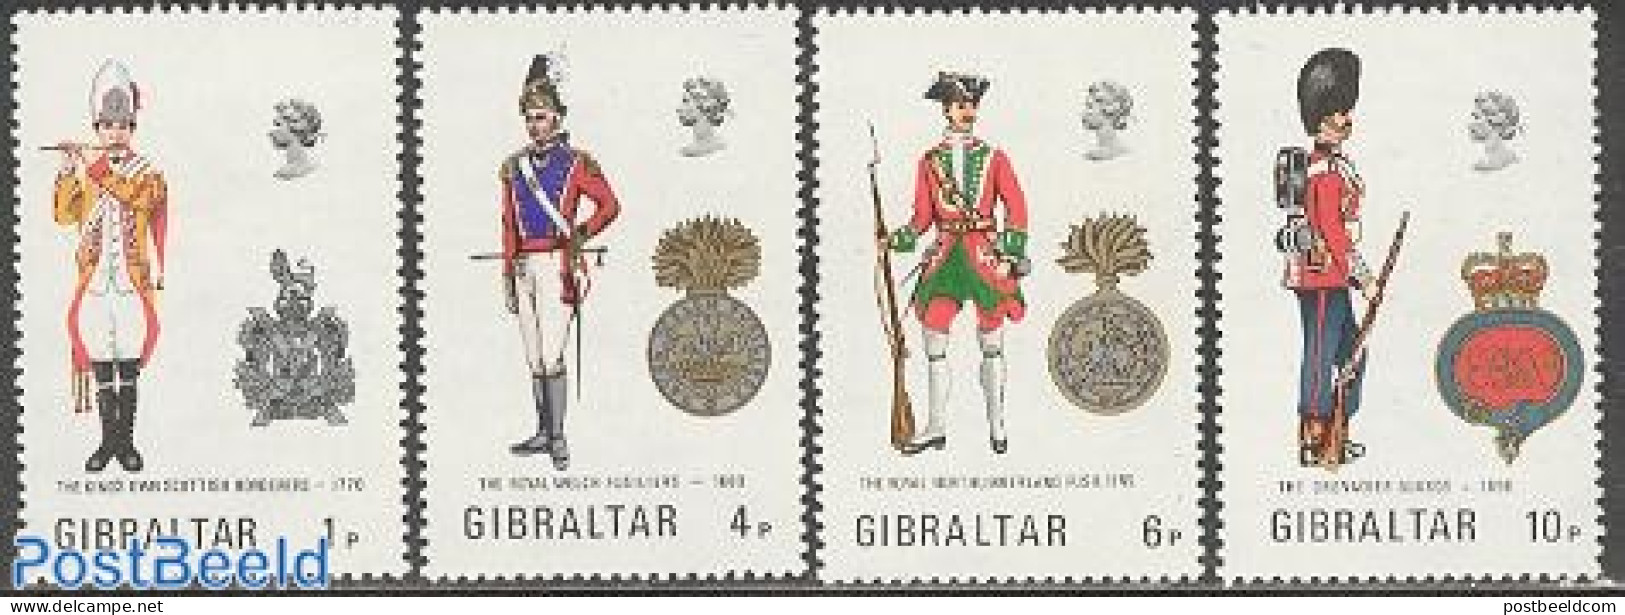 Gibraltar 1973 Uniforms 4v, Mint NH, History - Various - Coat Of Arms - Uniforms - Disfraces